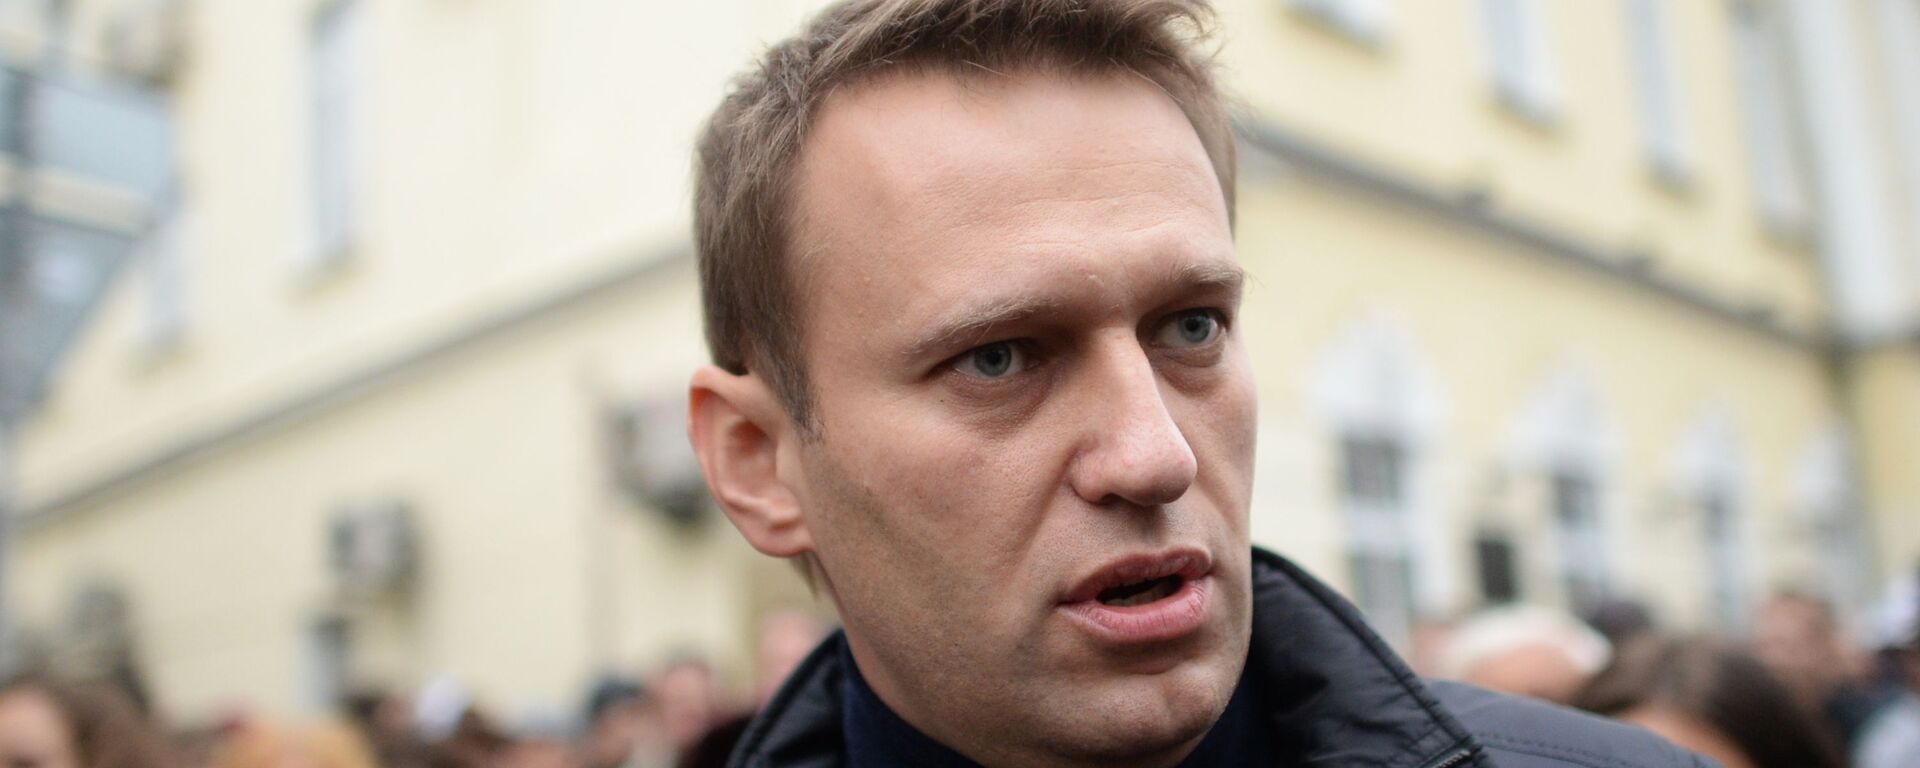 Alexéi Navalni, activista opositor ruso - Sputnik Mundo, 1920, 04.02.2021